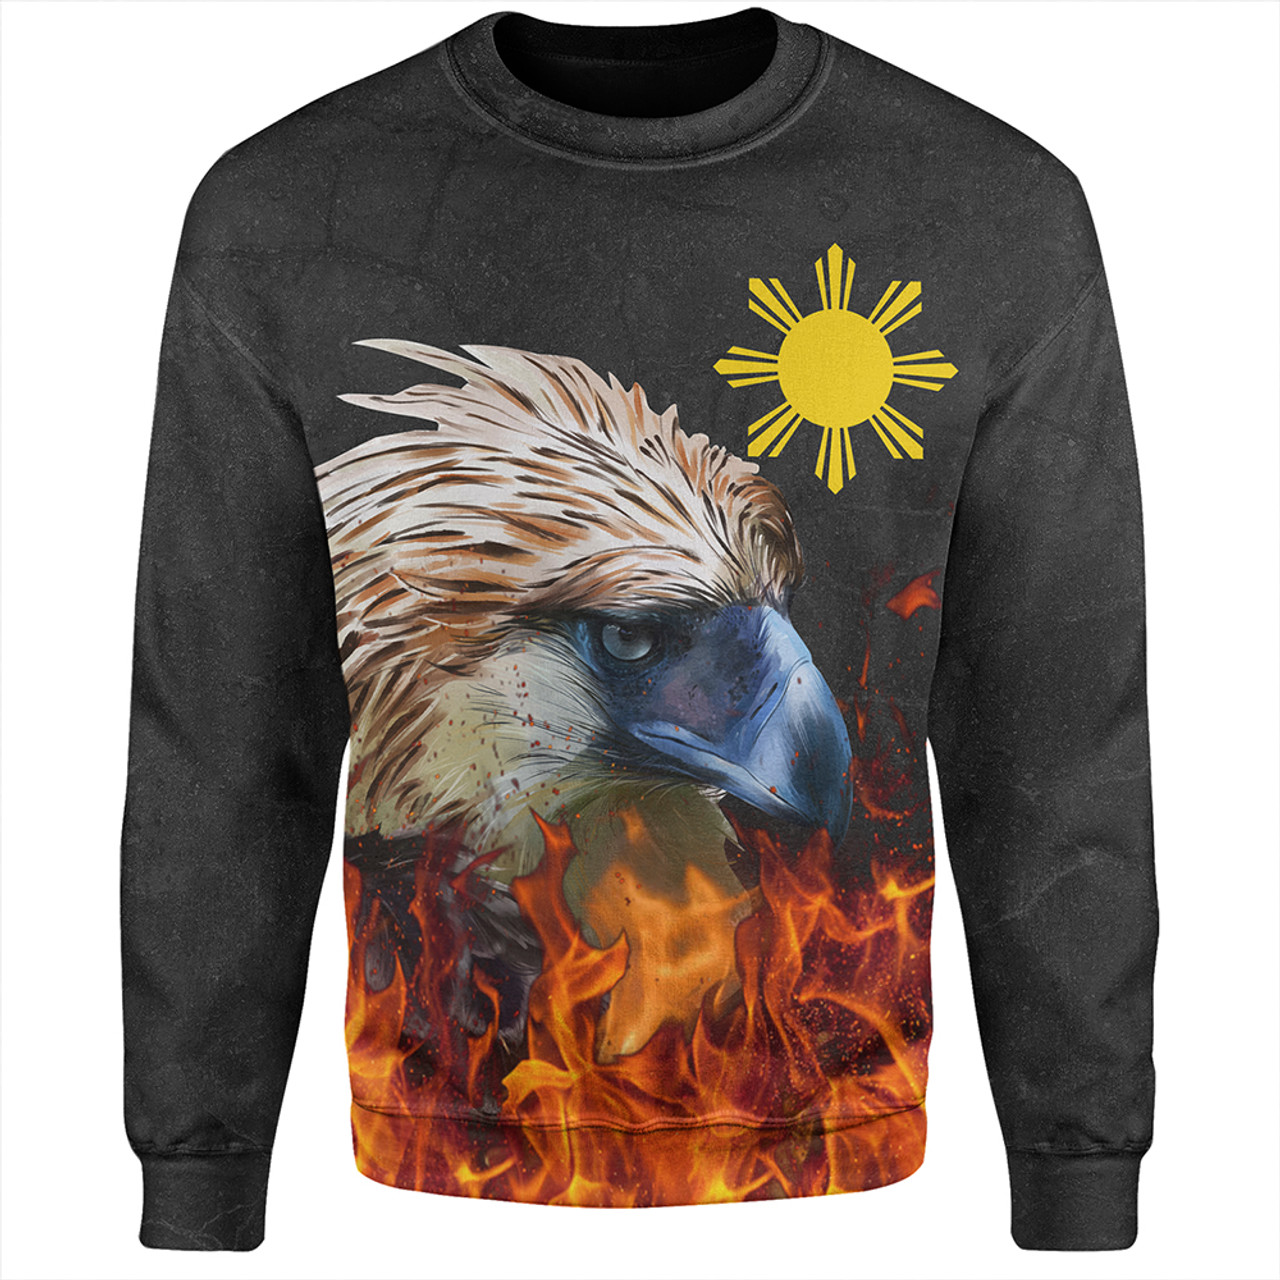 Philippines Sweatshirt Eagle Fire Style